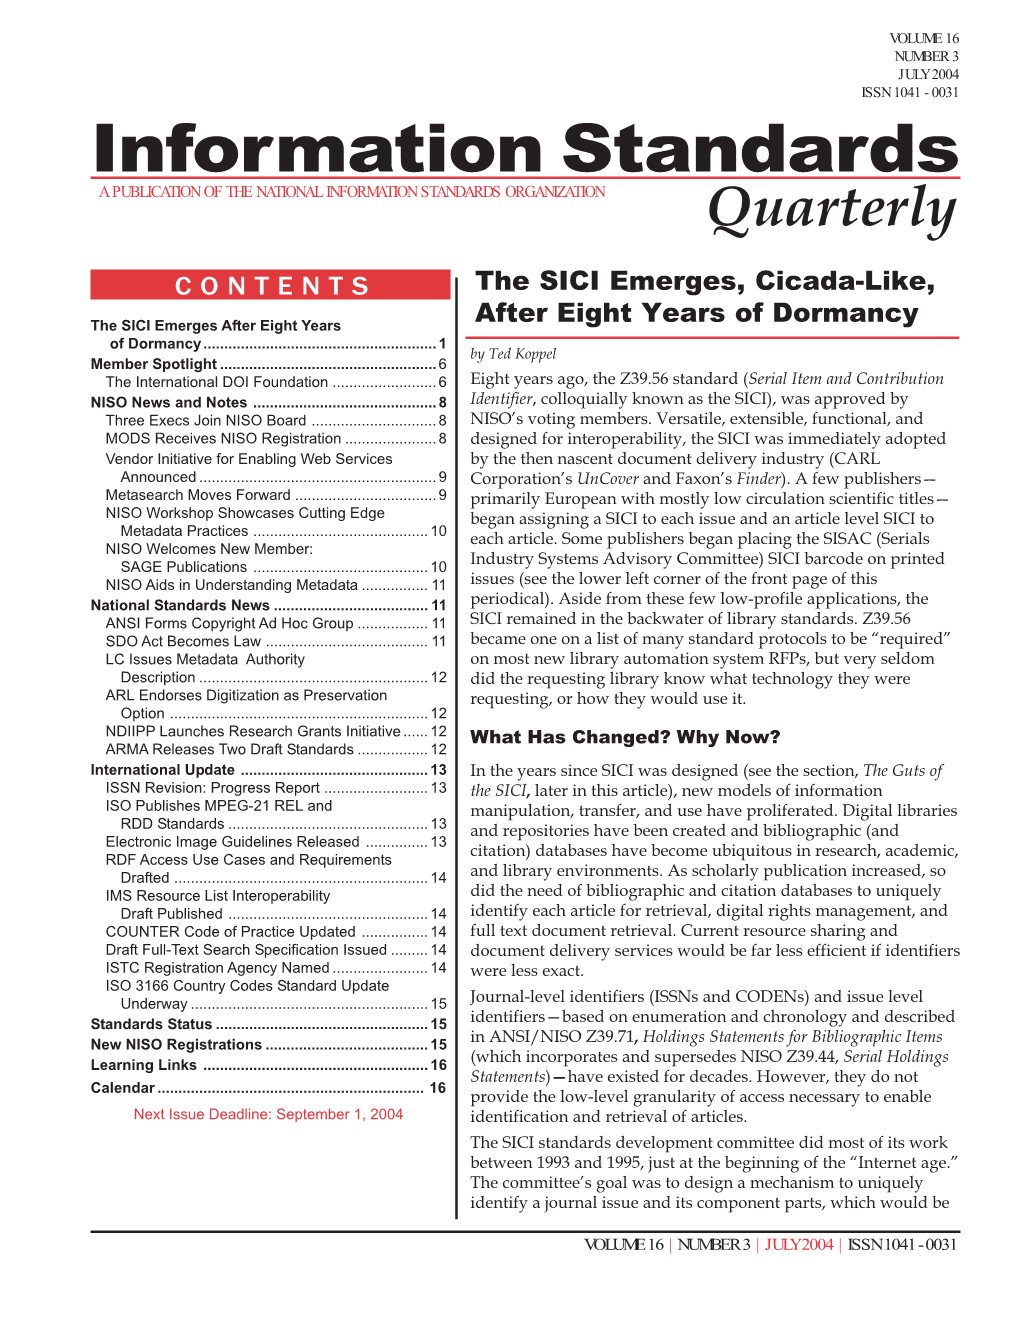 Information Standards Quarterly July 2004